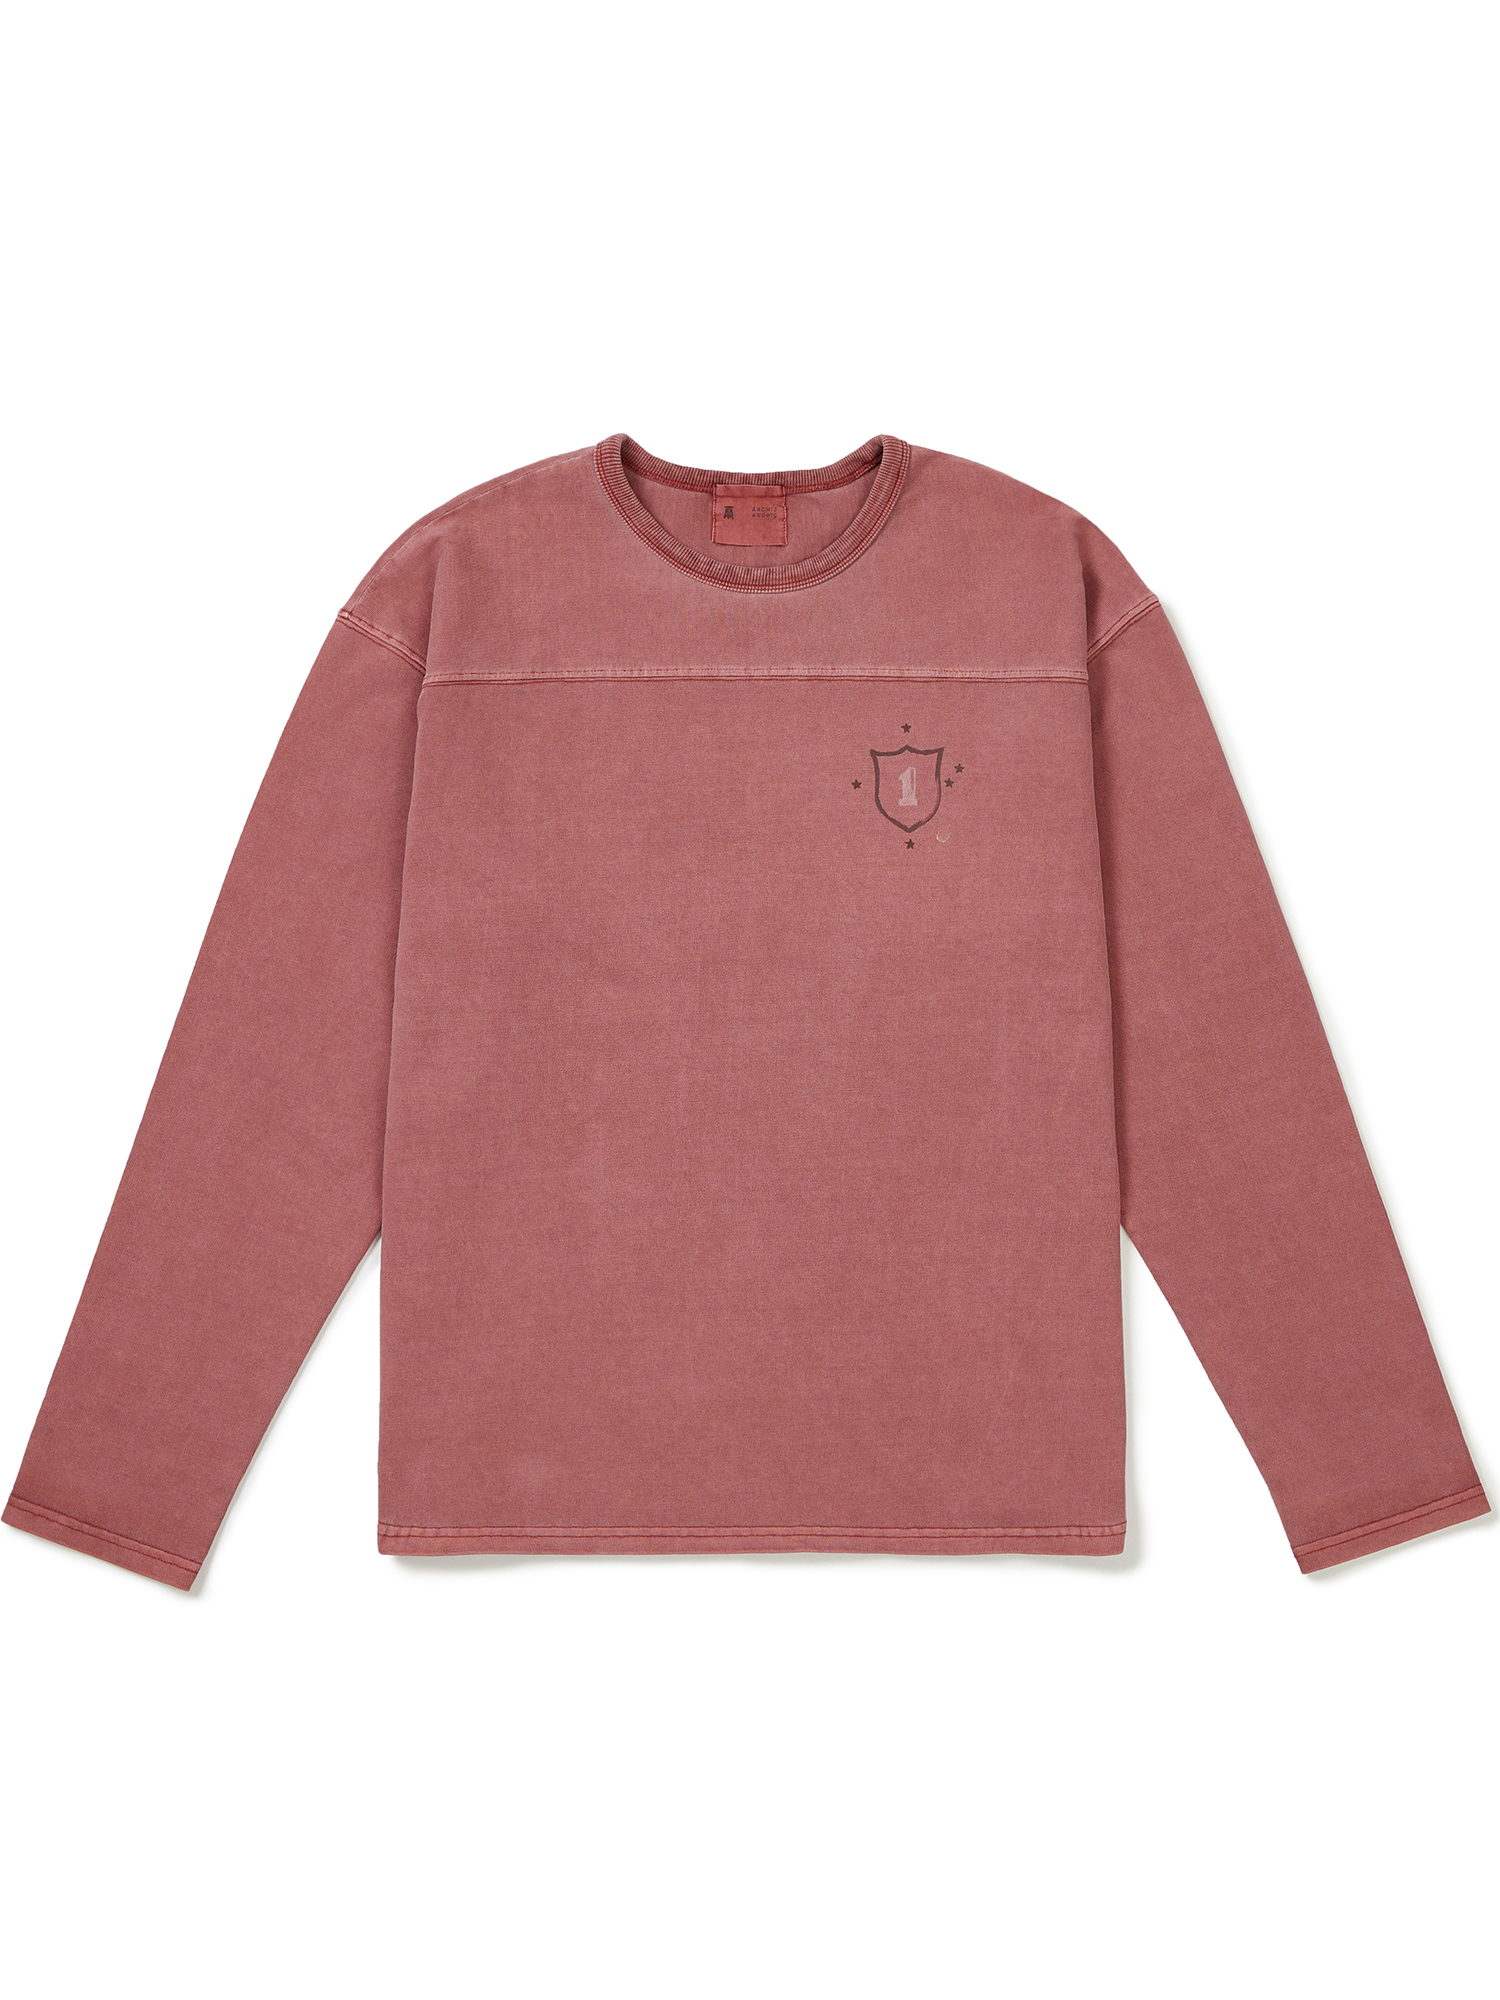 1st FootballShirt - Pigment Dyeing(Indian Pink)